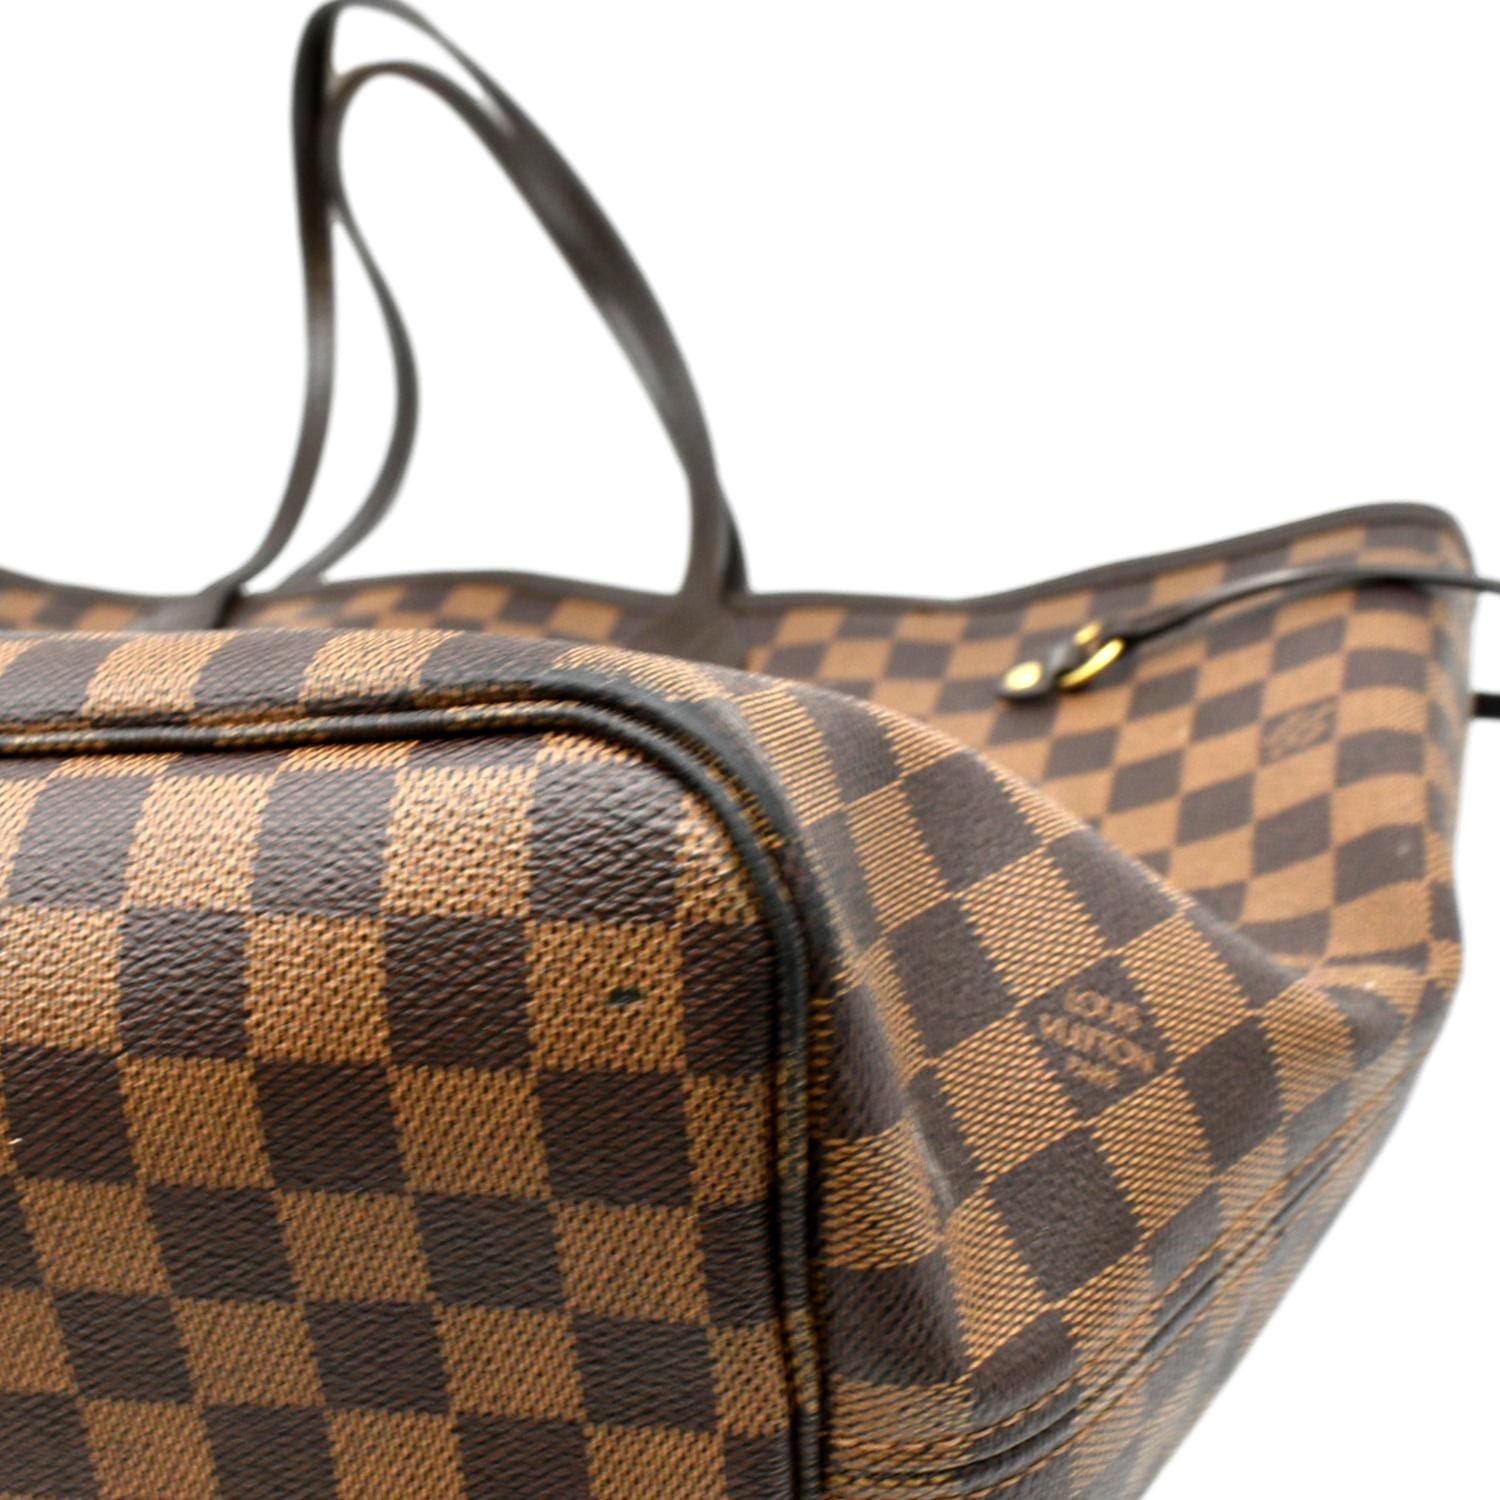 Louis Vuitton Neverfull GM Damier Ebene Tote Shoulder Bag